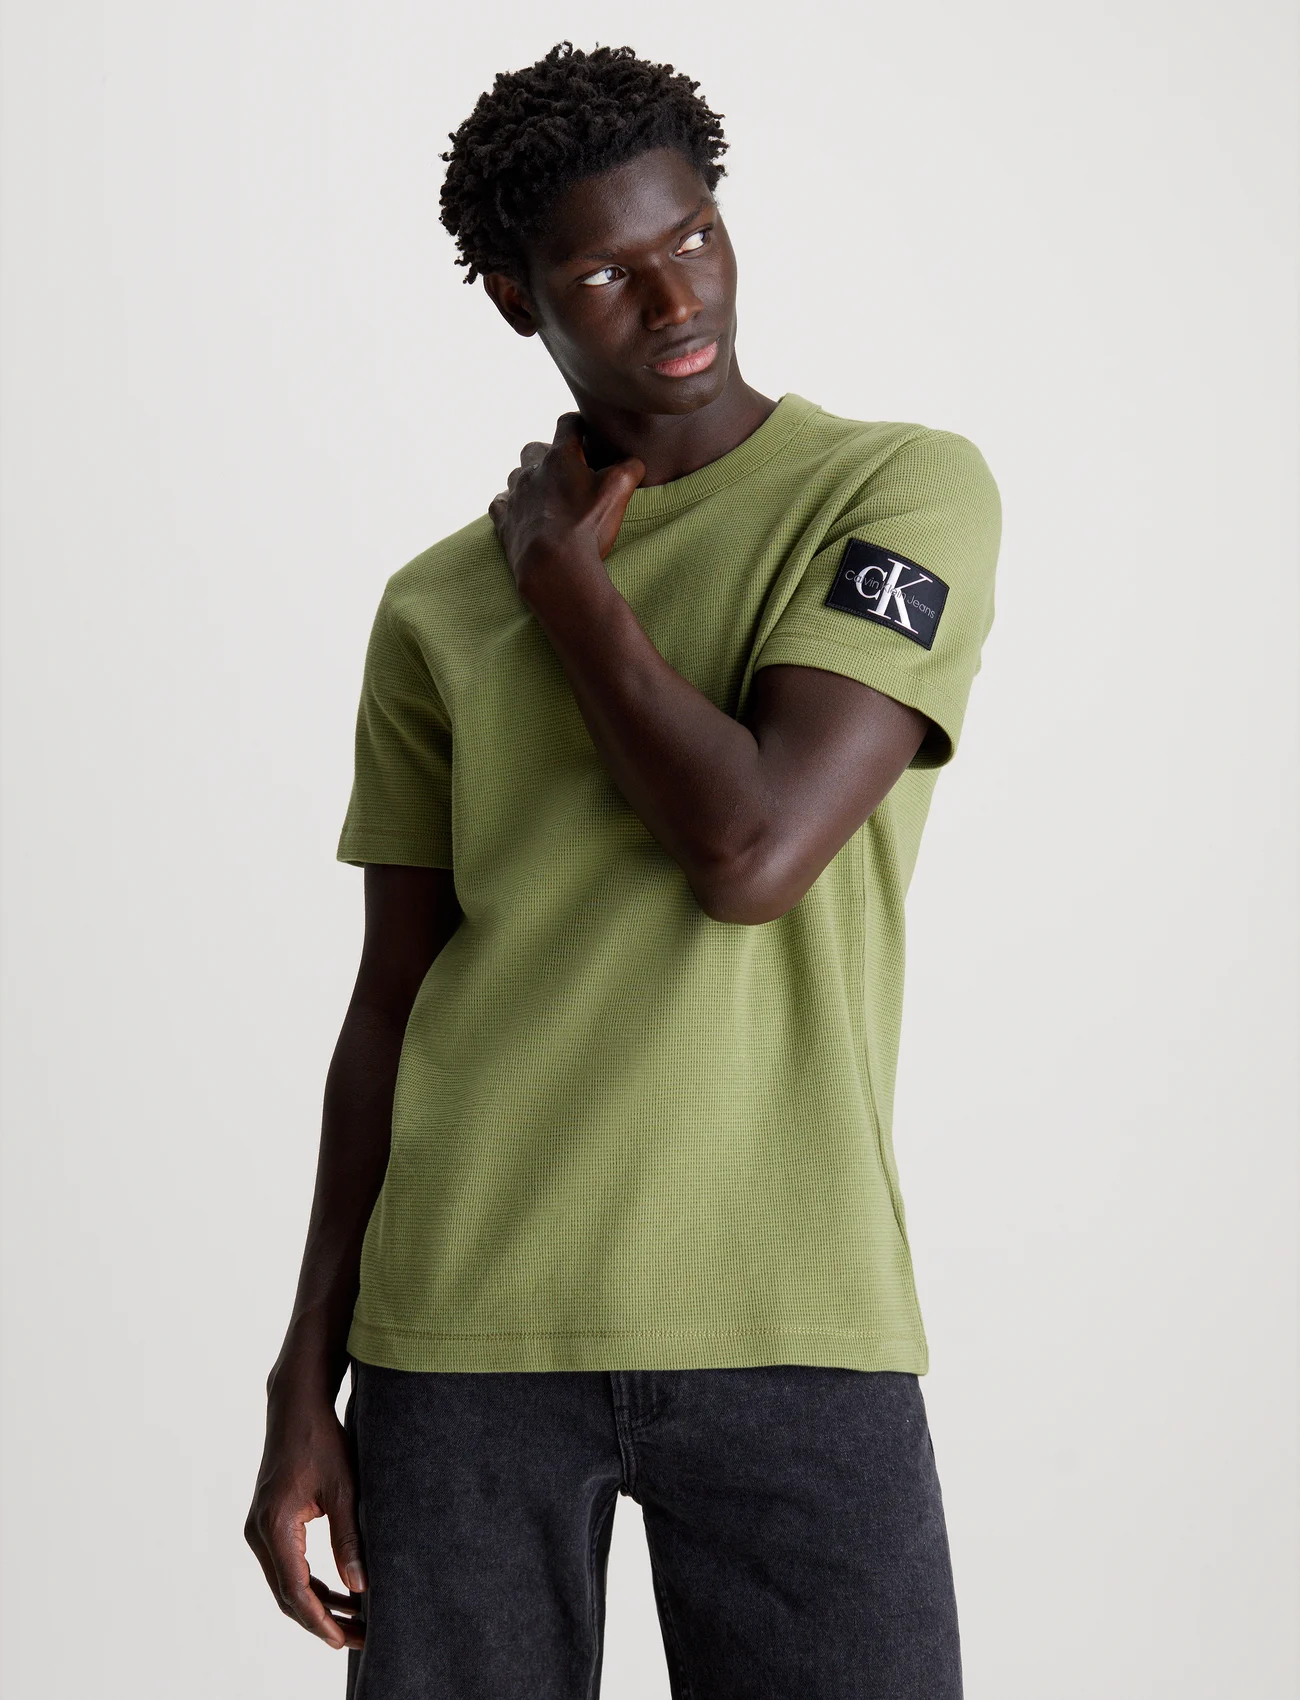 Calvin Klein Jeans - BADGE WAFFLE TEE - podstawowe koszulki - dark juniper - 1